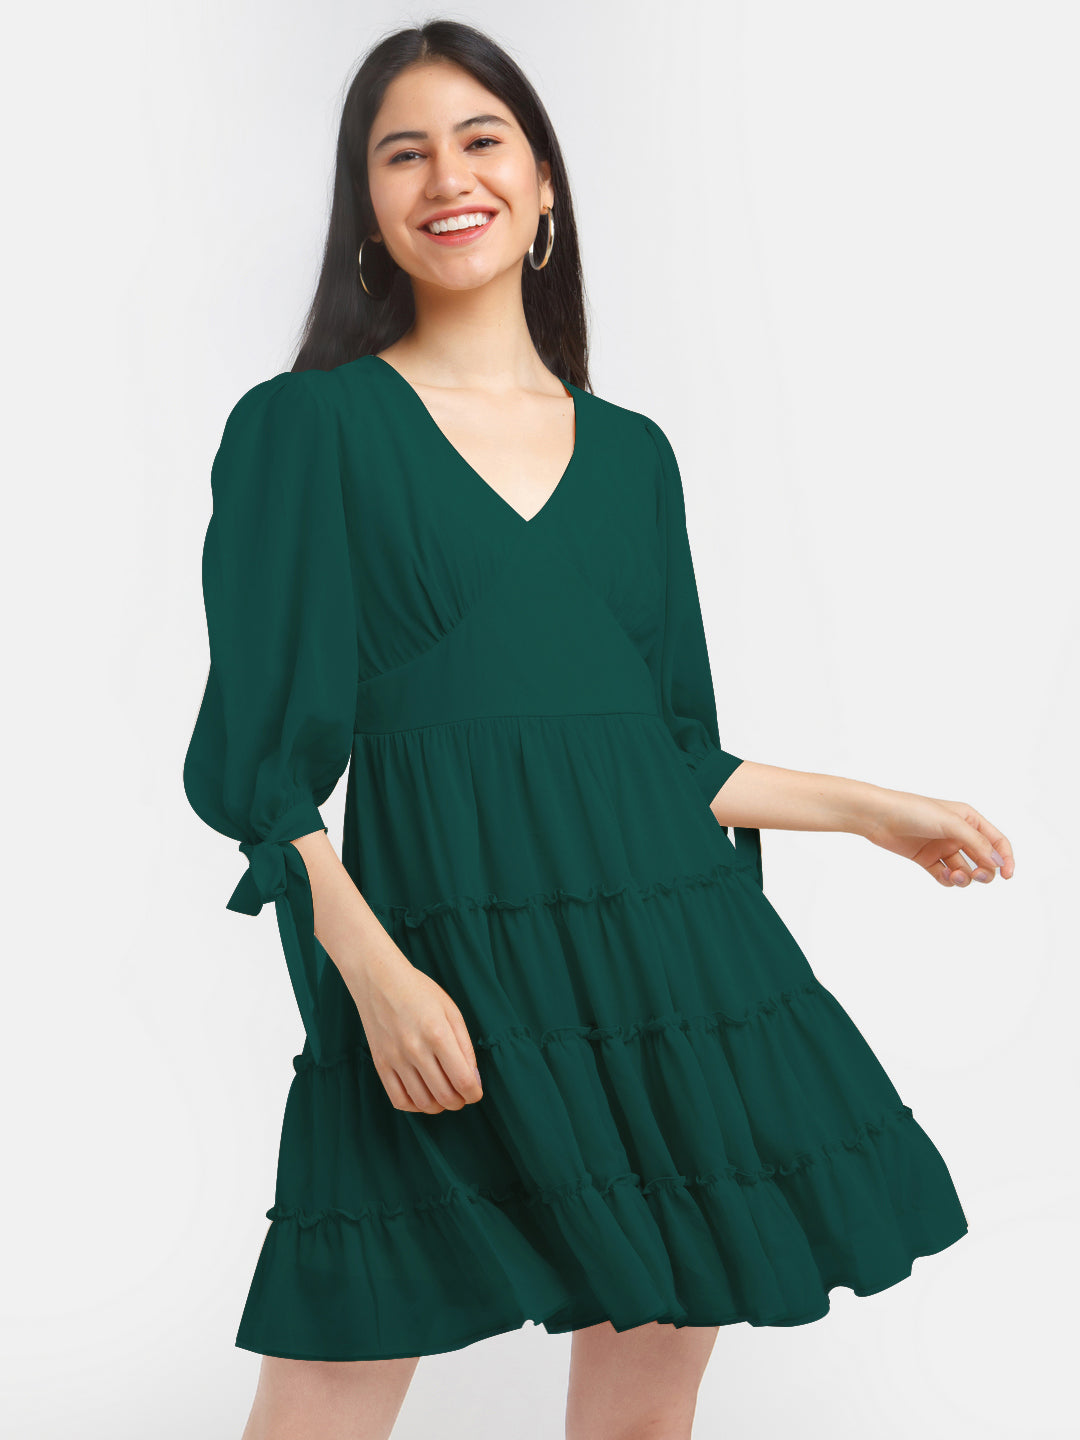 Green Solid Short Dress for Women